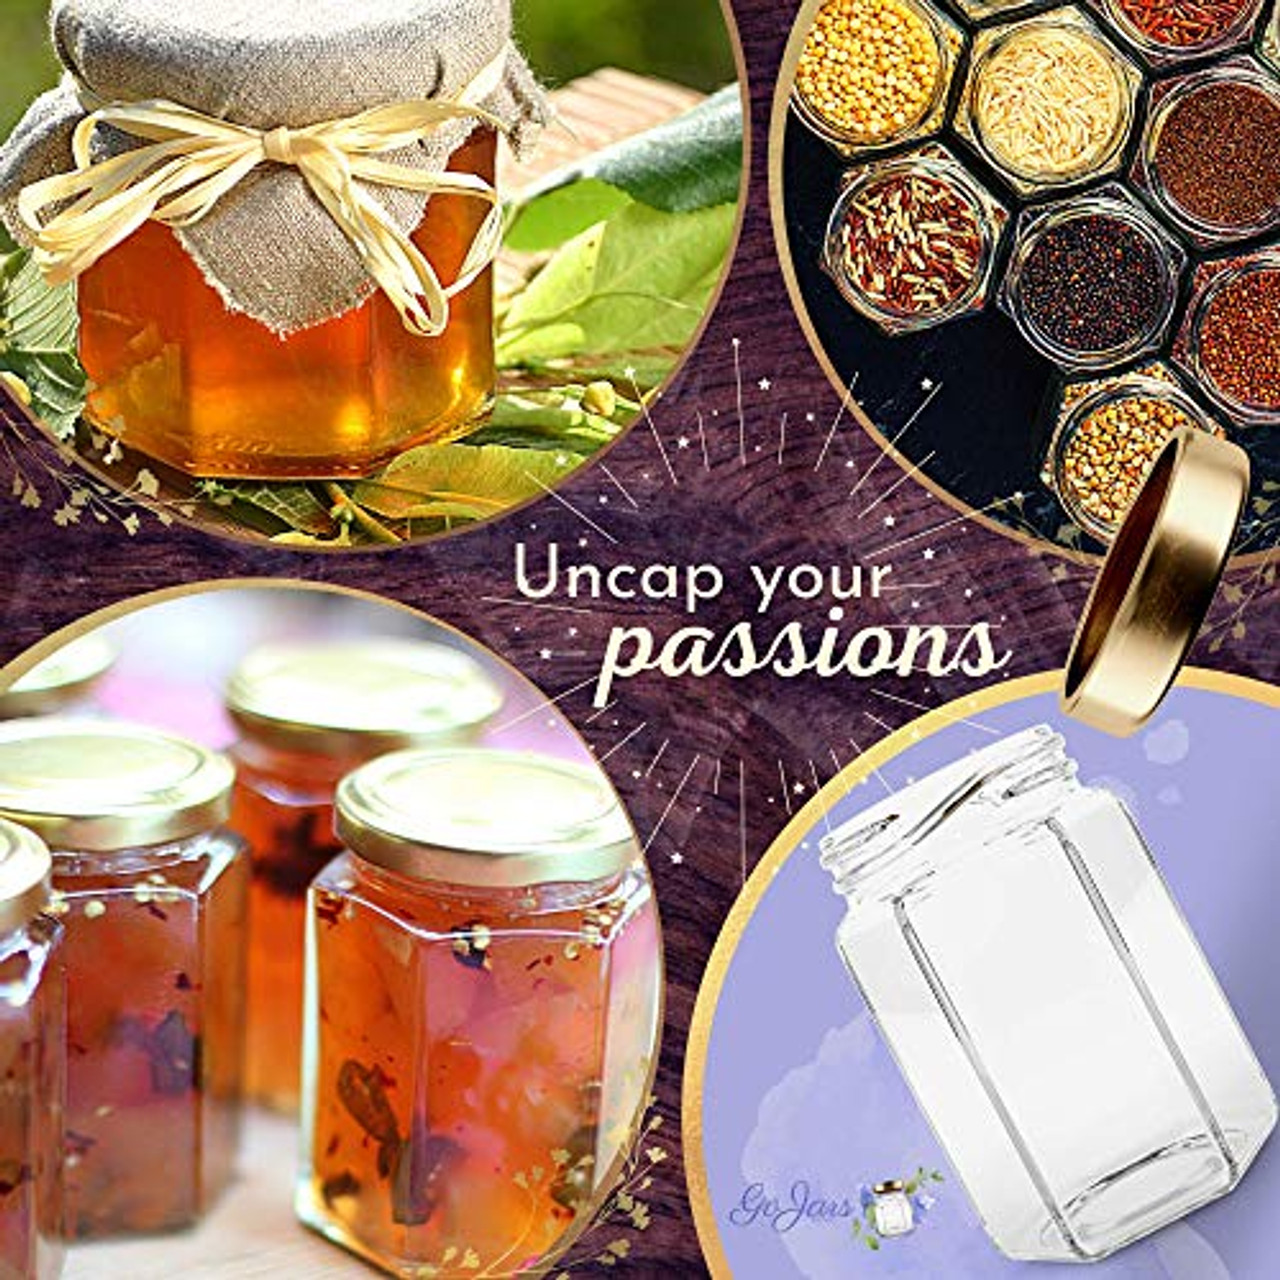 30 Pack 6oz Hexagon Glass Jars with Gold Lids, 180ml Clear Glass Canning  Jars Honey Jars Spice Jars Mason Jars for Herb, Jams, Shower Favors,  Wedding